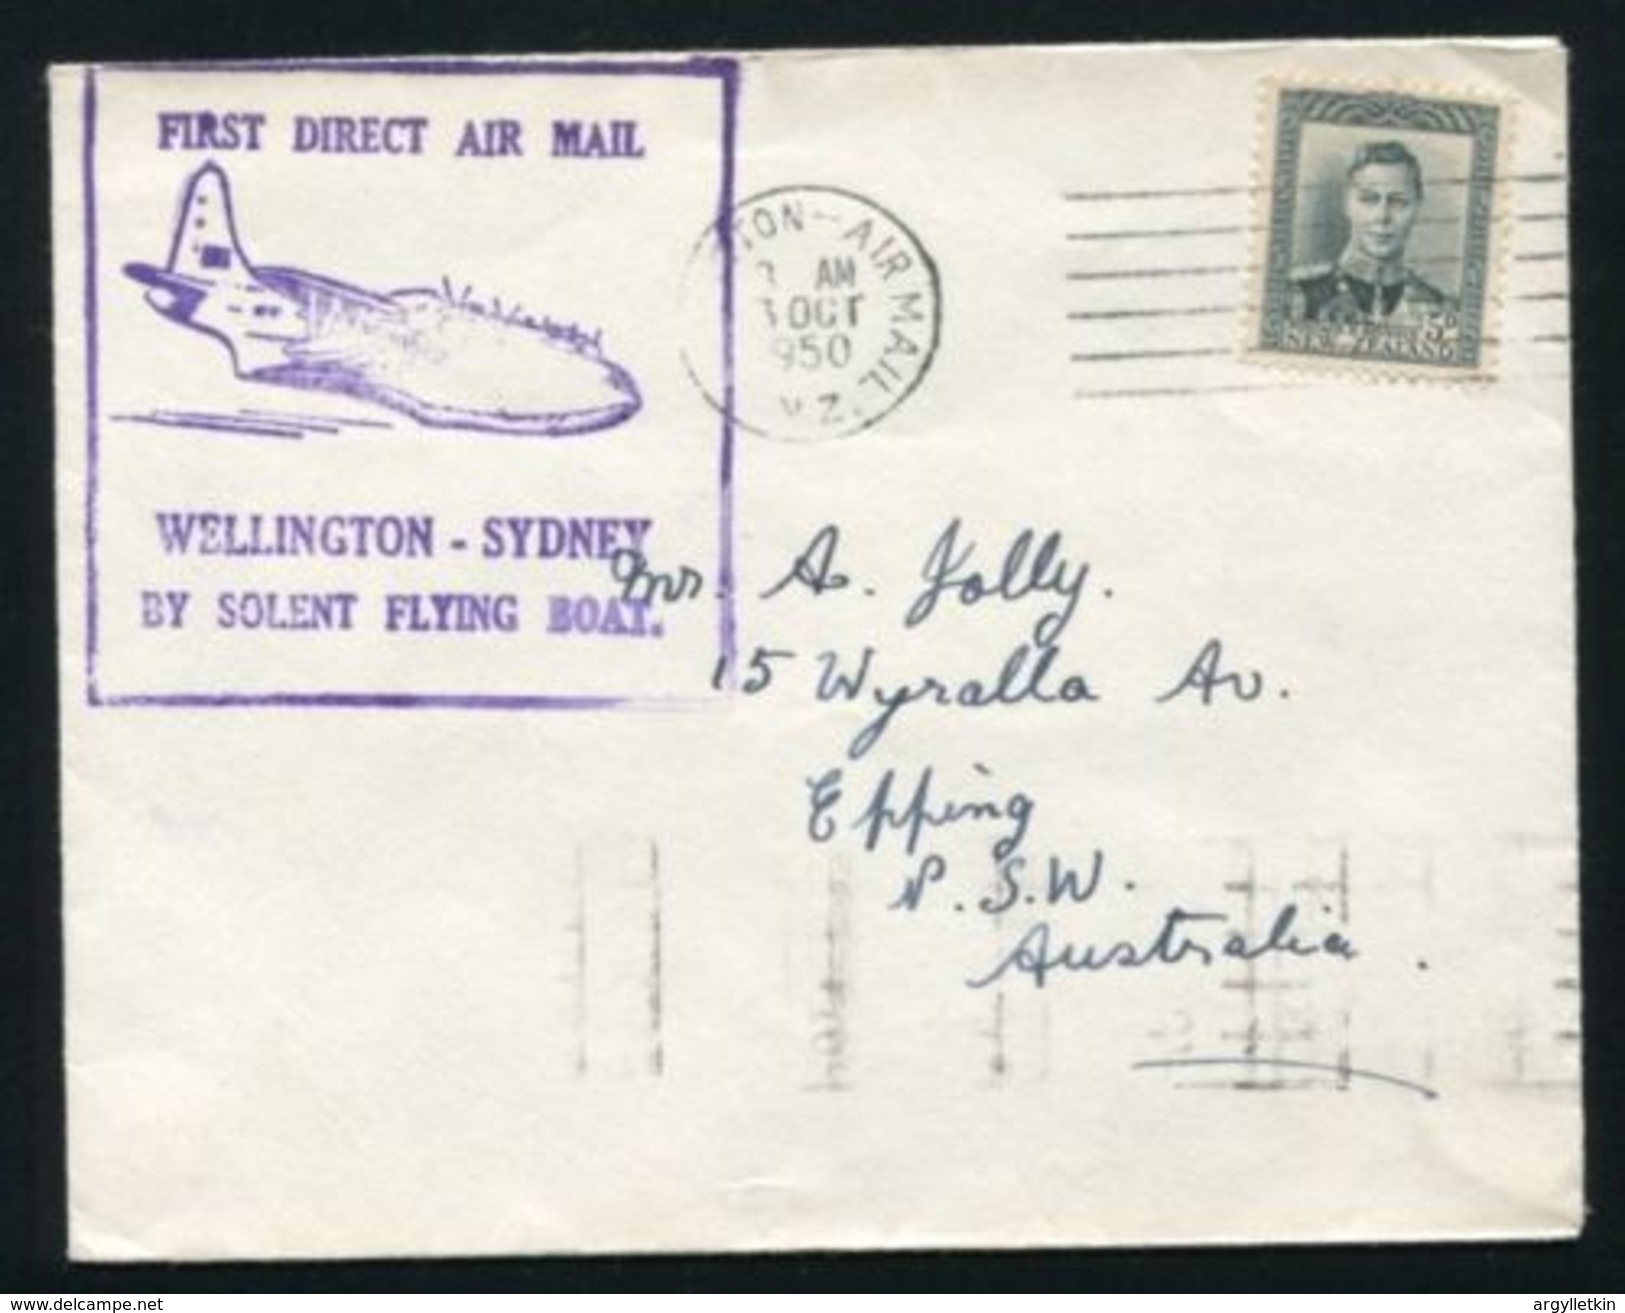 NEW ZEALAND / AUSTRALIA FLYING BOAT COVER 1950 - Corréo Aéreo